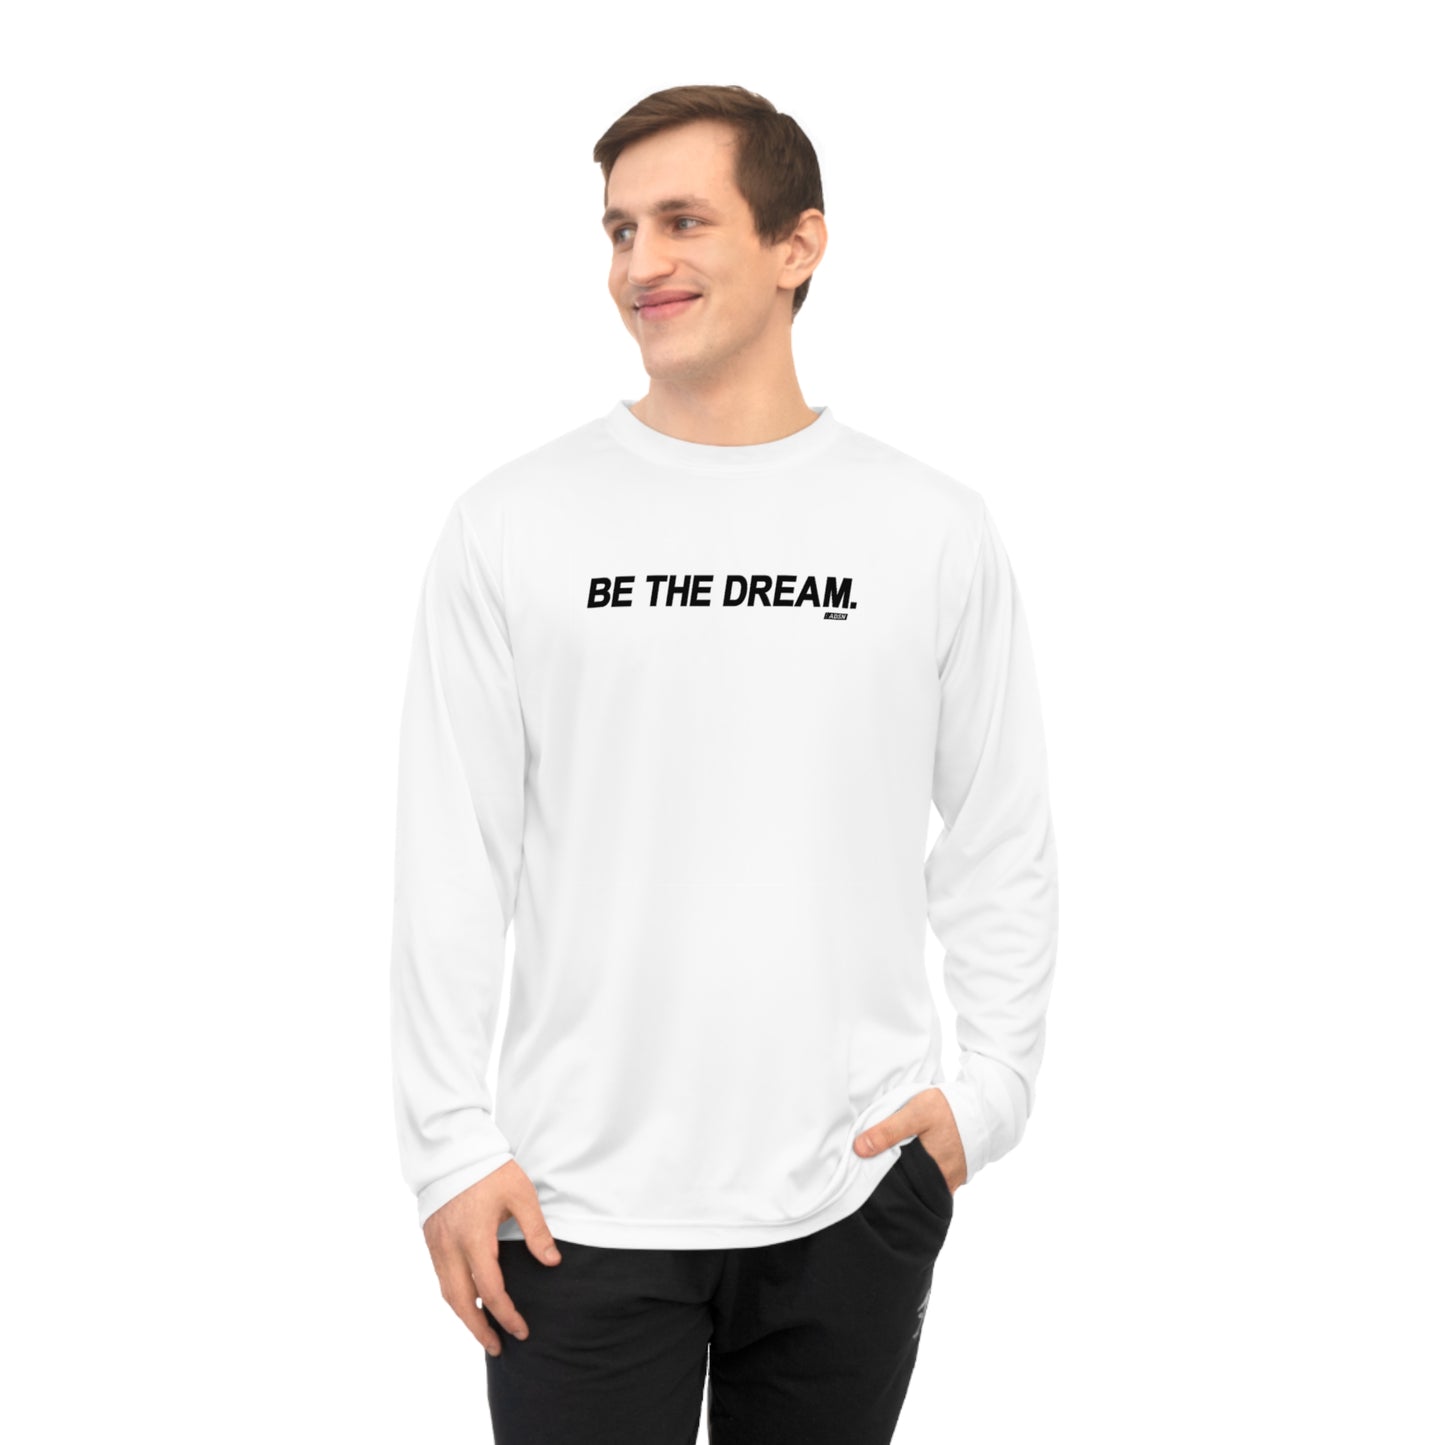 "Be The Dream" Men's Performance Long Sleeve Shirt